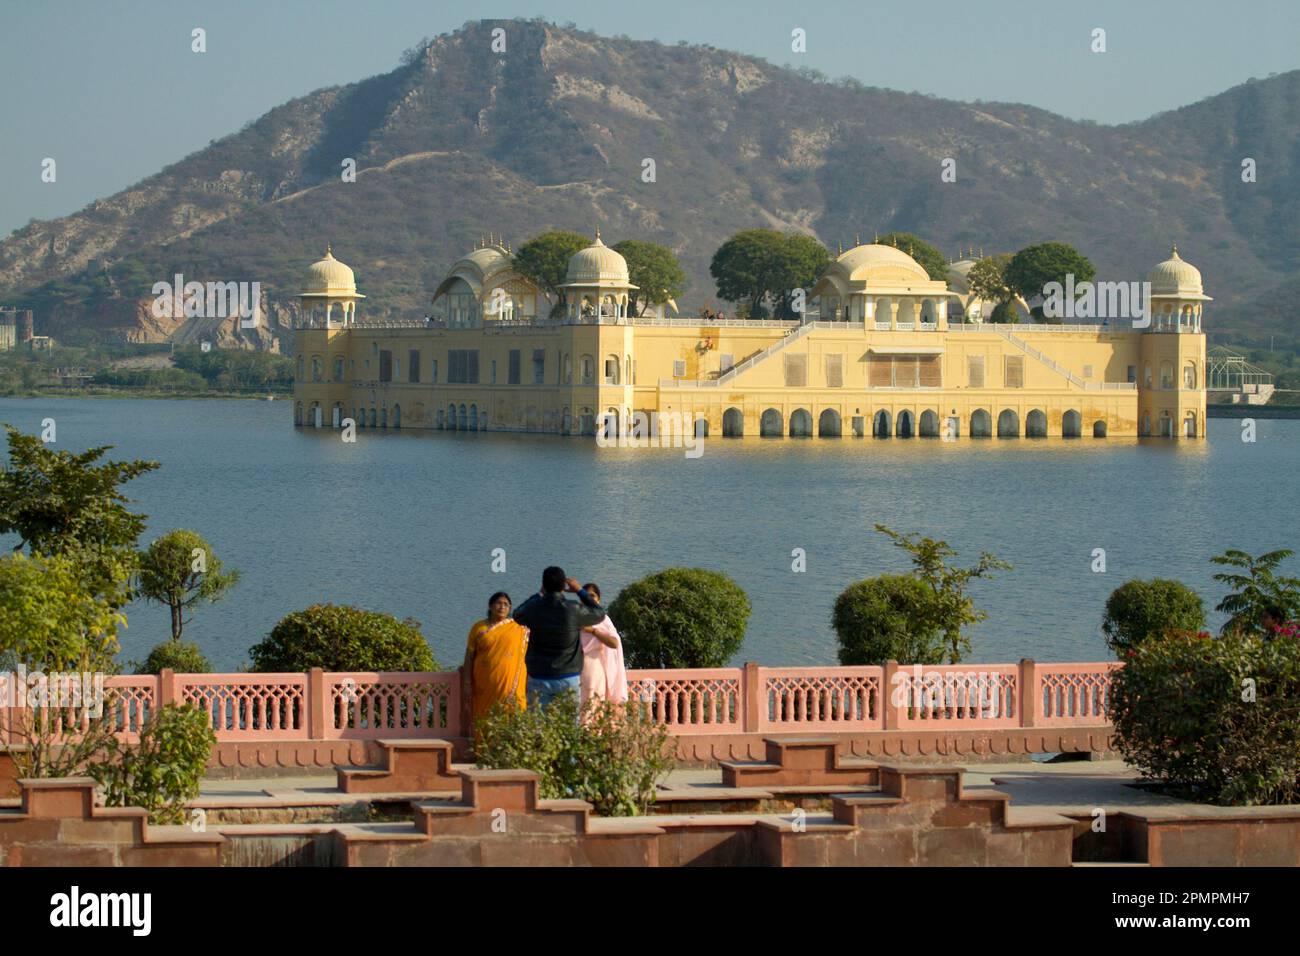 Il gruppo si riunisce per vedere JAL Mahal sul lago Man Sagar; JAL Mahal, Jaipur, Rajasthan State, India Foto Stock